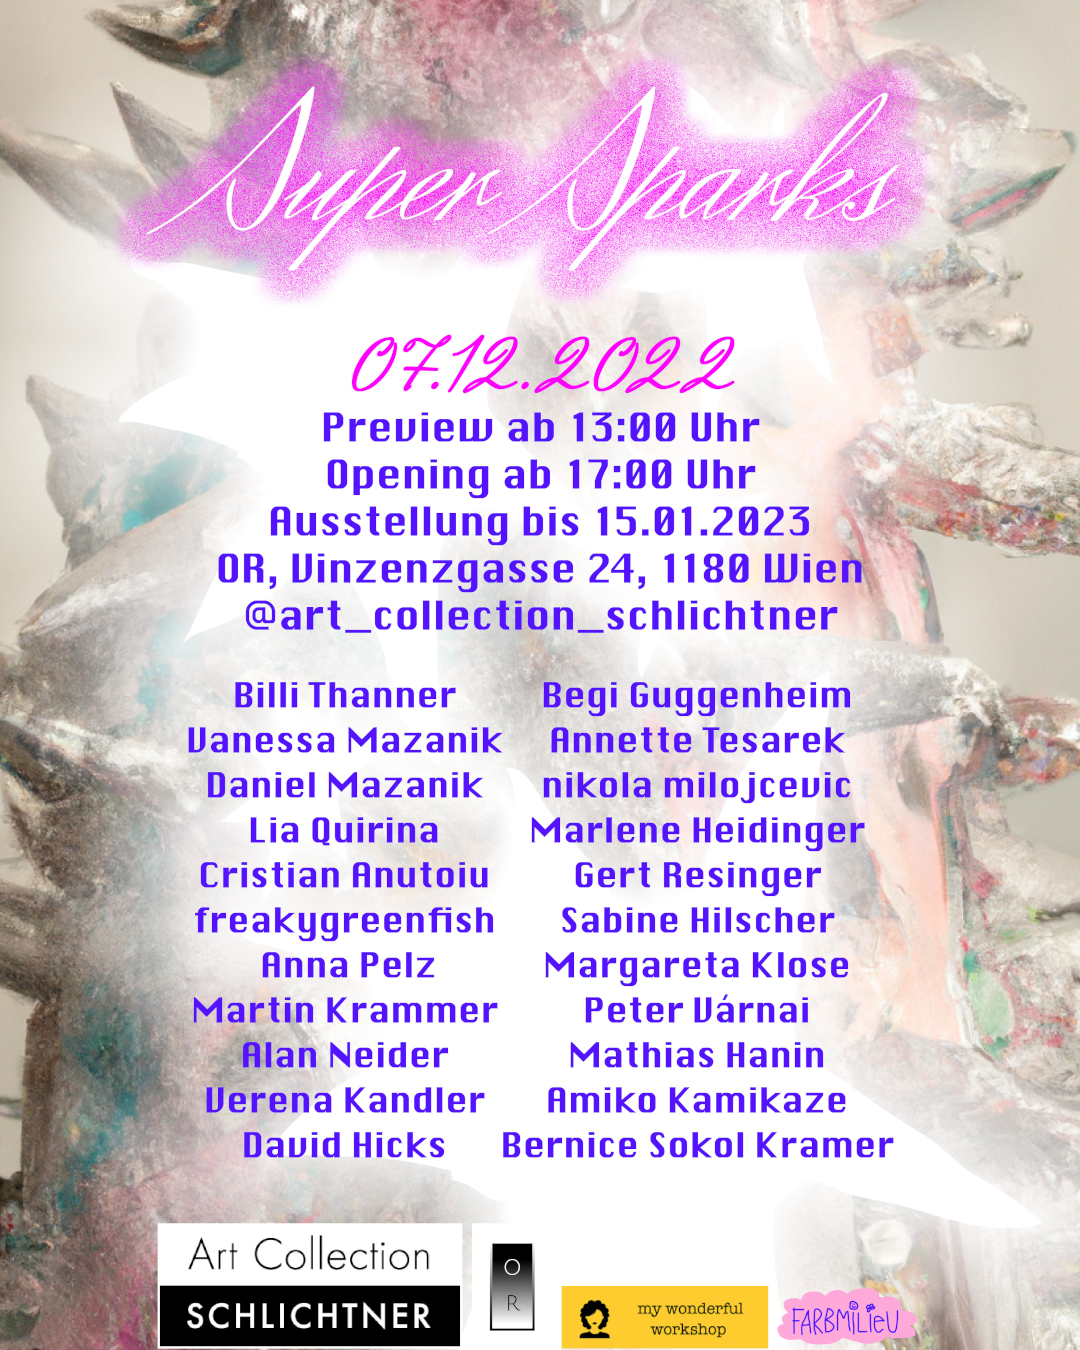 SUPER SPARKS – 07.12.2022 – 15.01.2023. Preview  13:00, Opening  17:00 Uhr. Location: OR, Vinzenzgasse 24, 1180 Wien.